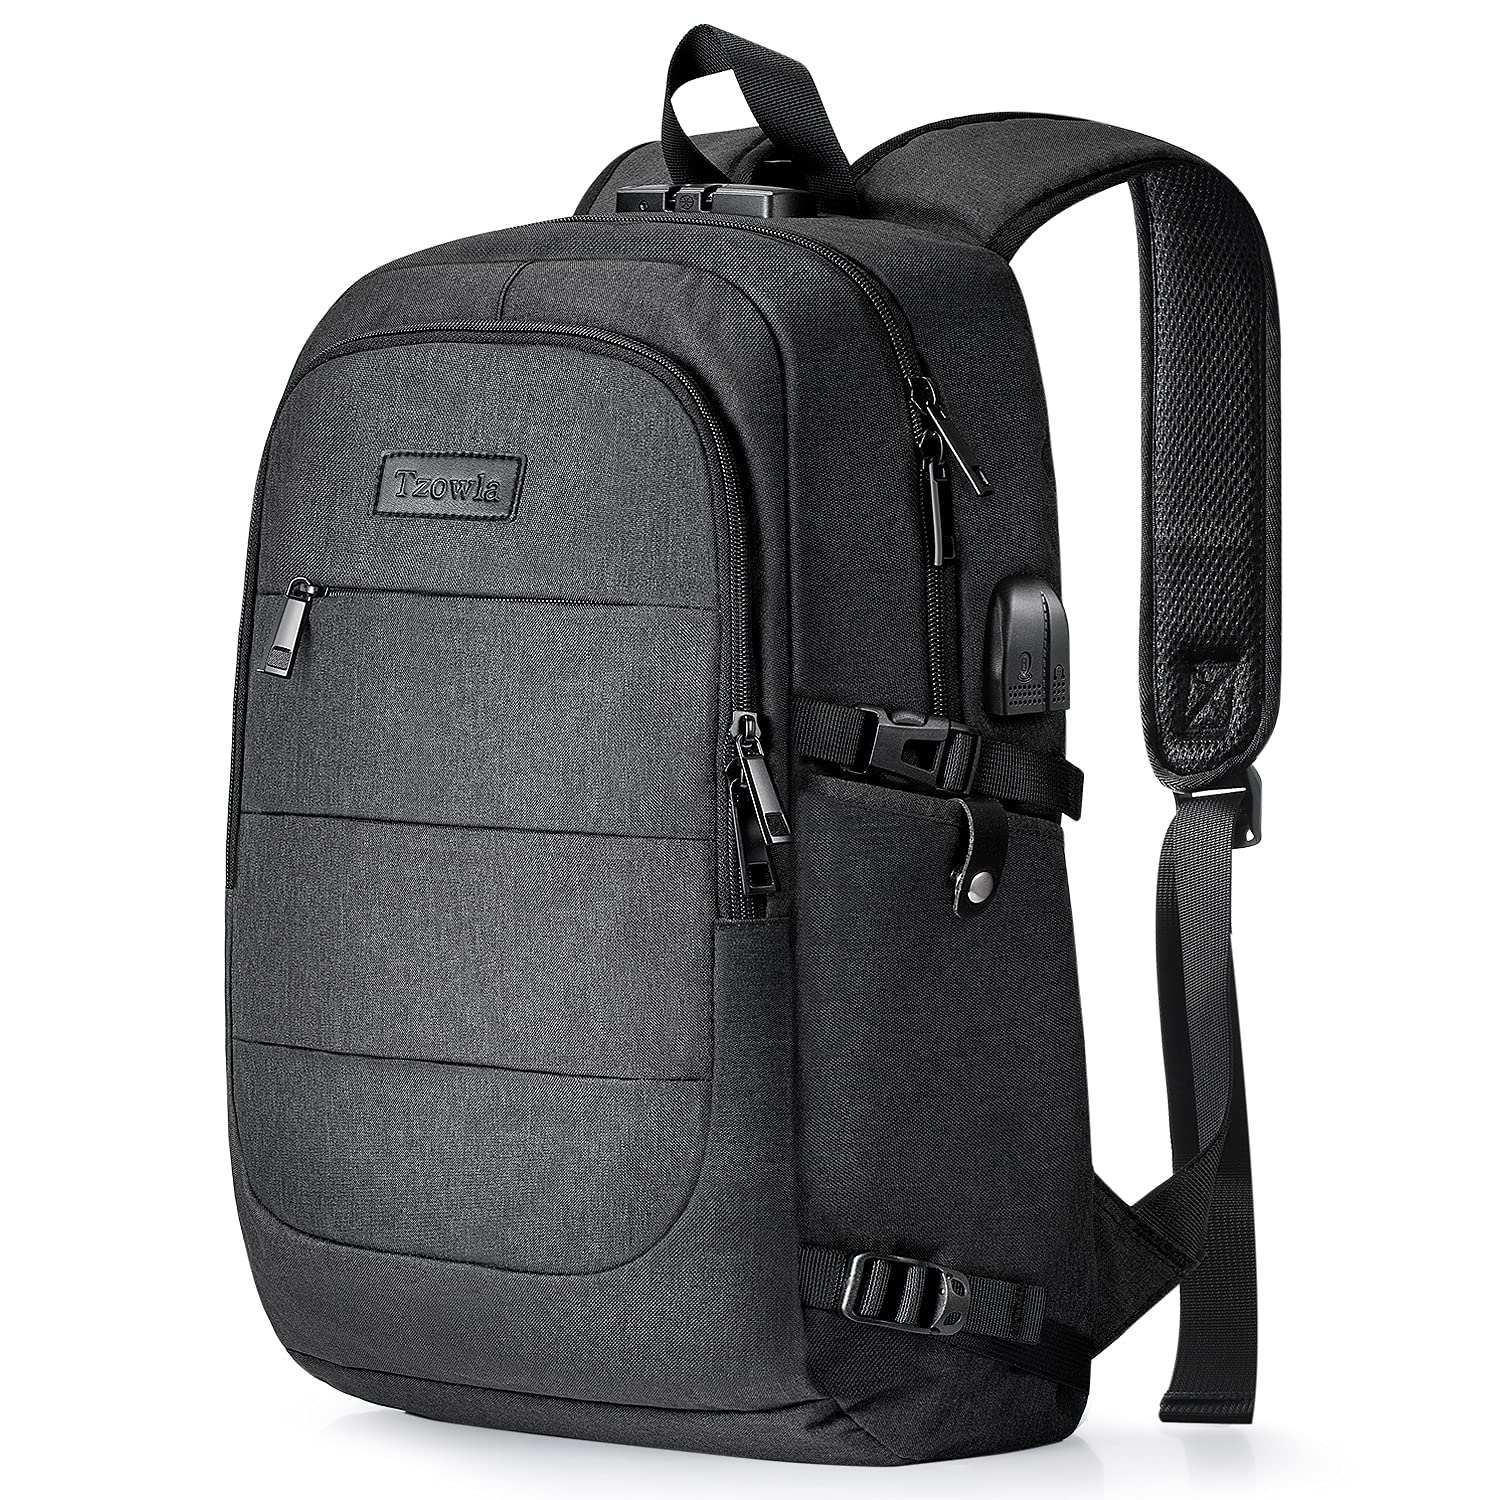 Tzowla Travel Business Laptop Backpack Fits 15.6-17.3 for Men Women Gift